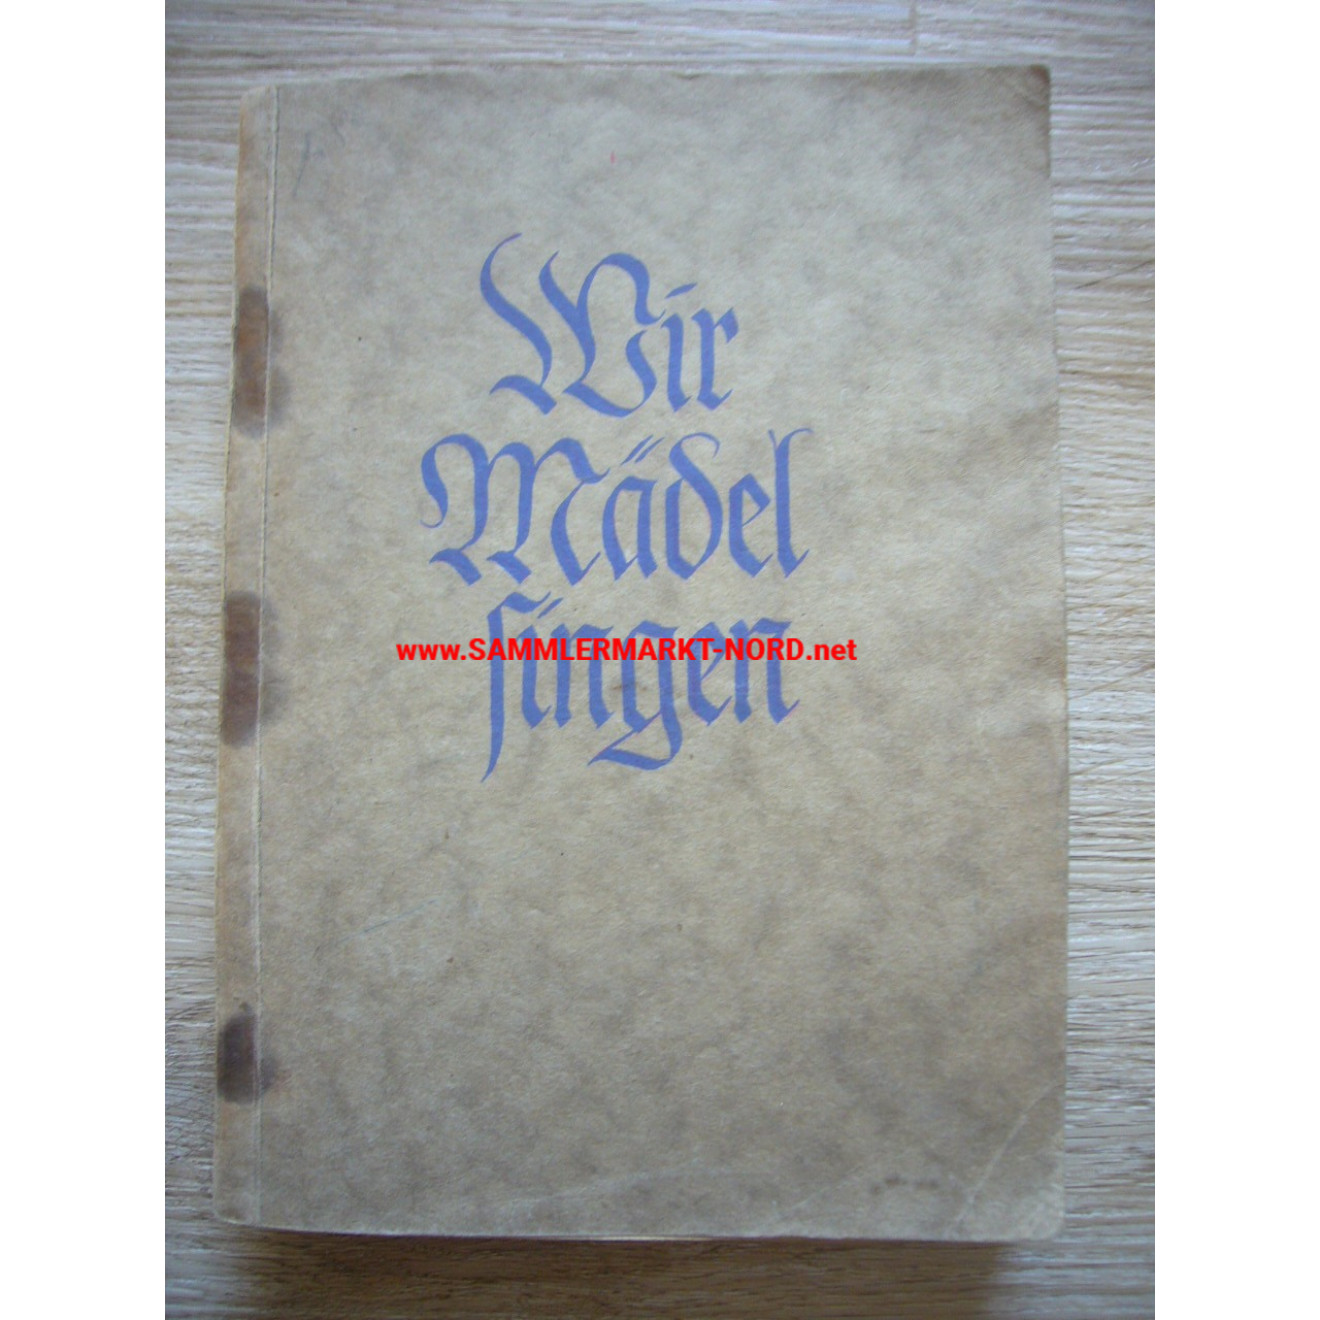 Wir Mädel singen - Songbook of the League of German Girls (BDM)